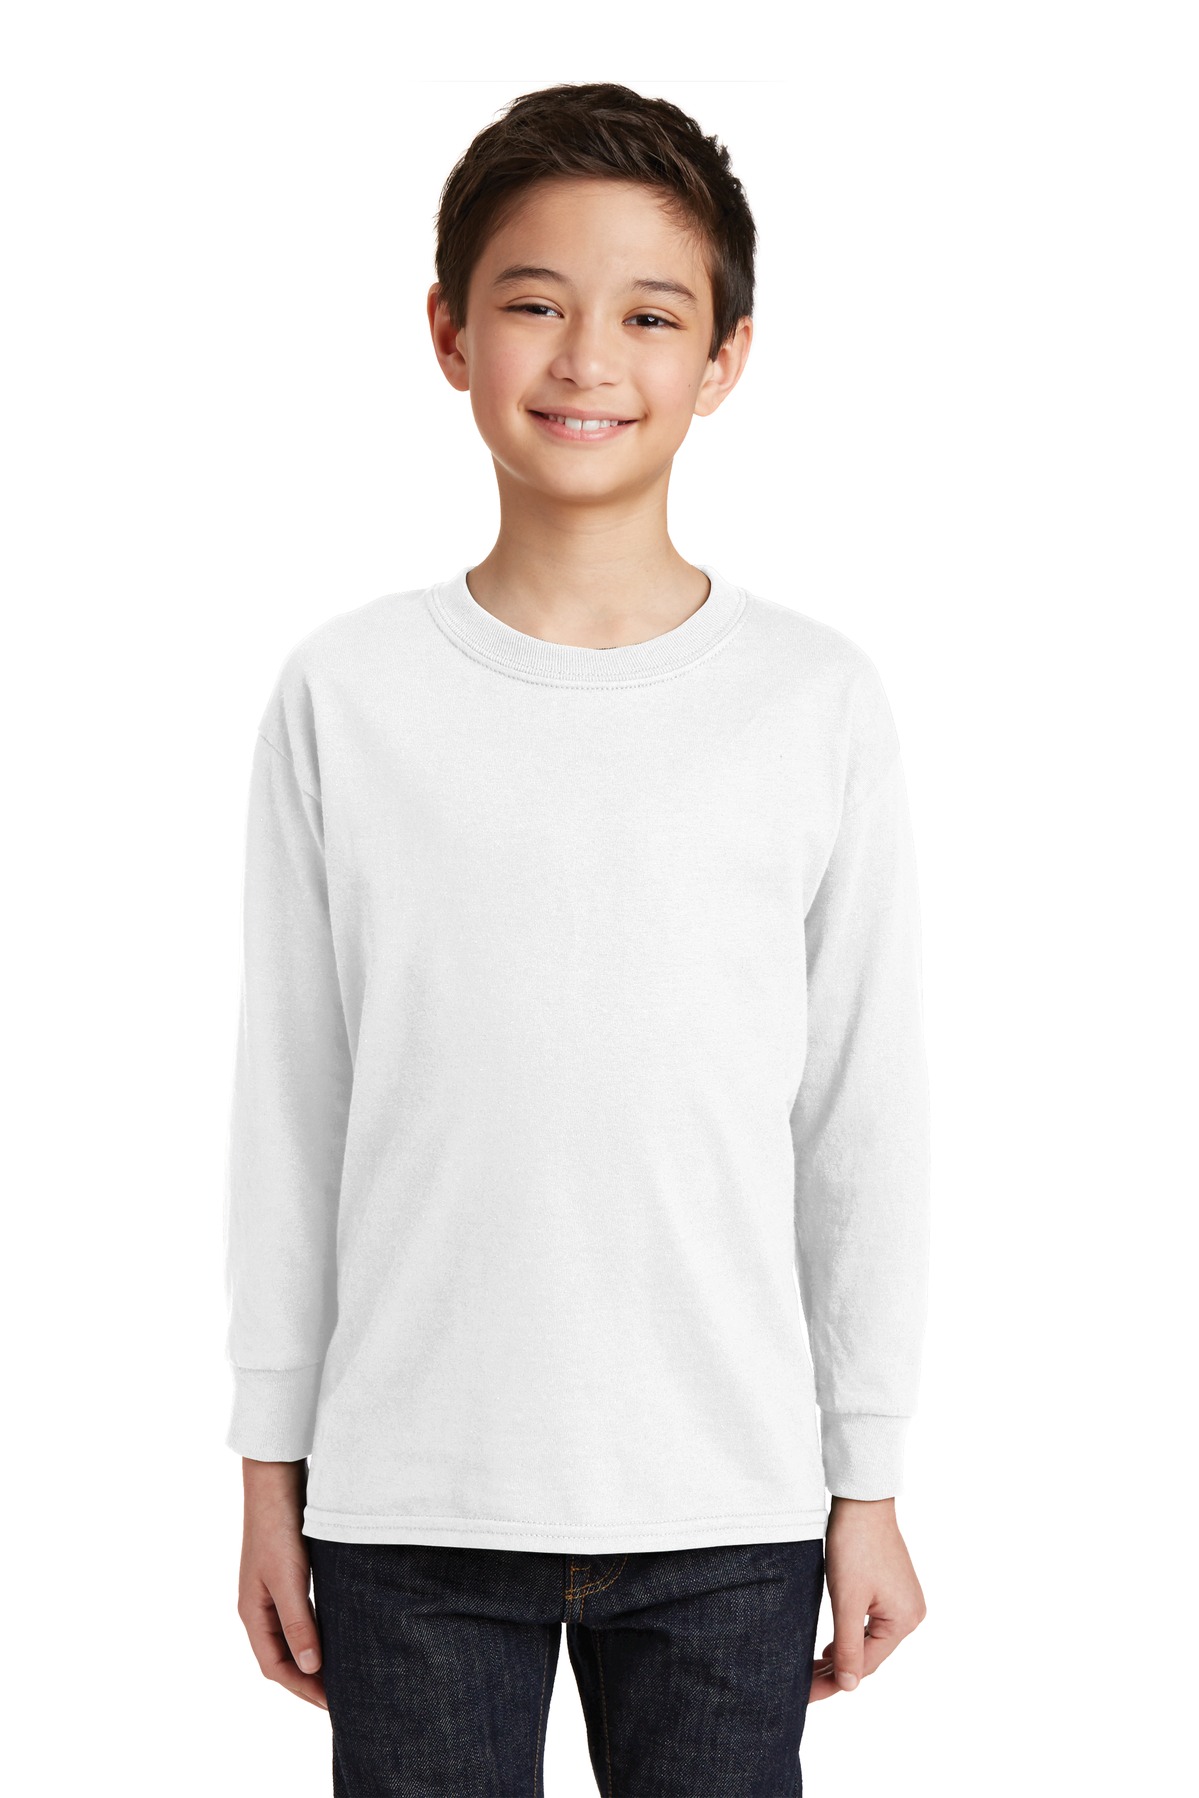 Gildan Corporate Hospitality Youth TShirts ® Youth Heavy Cotton 100% Cotton Long Sleeve T-Shirt.-Gildan